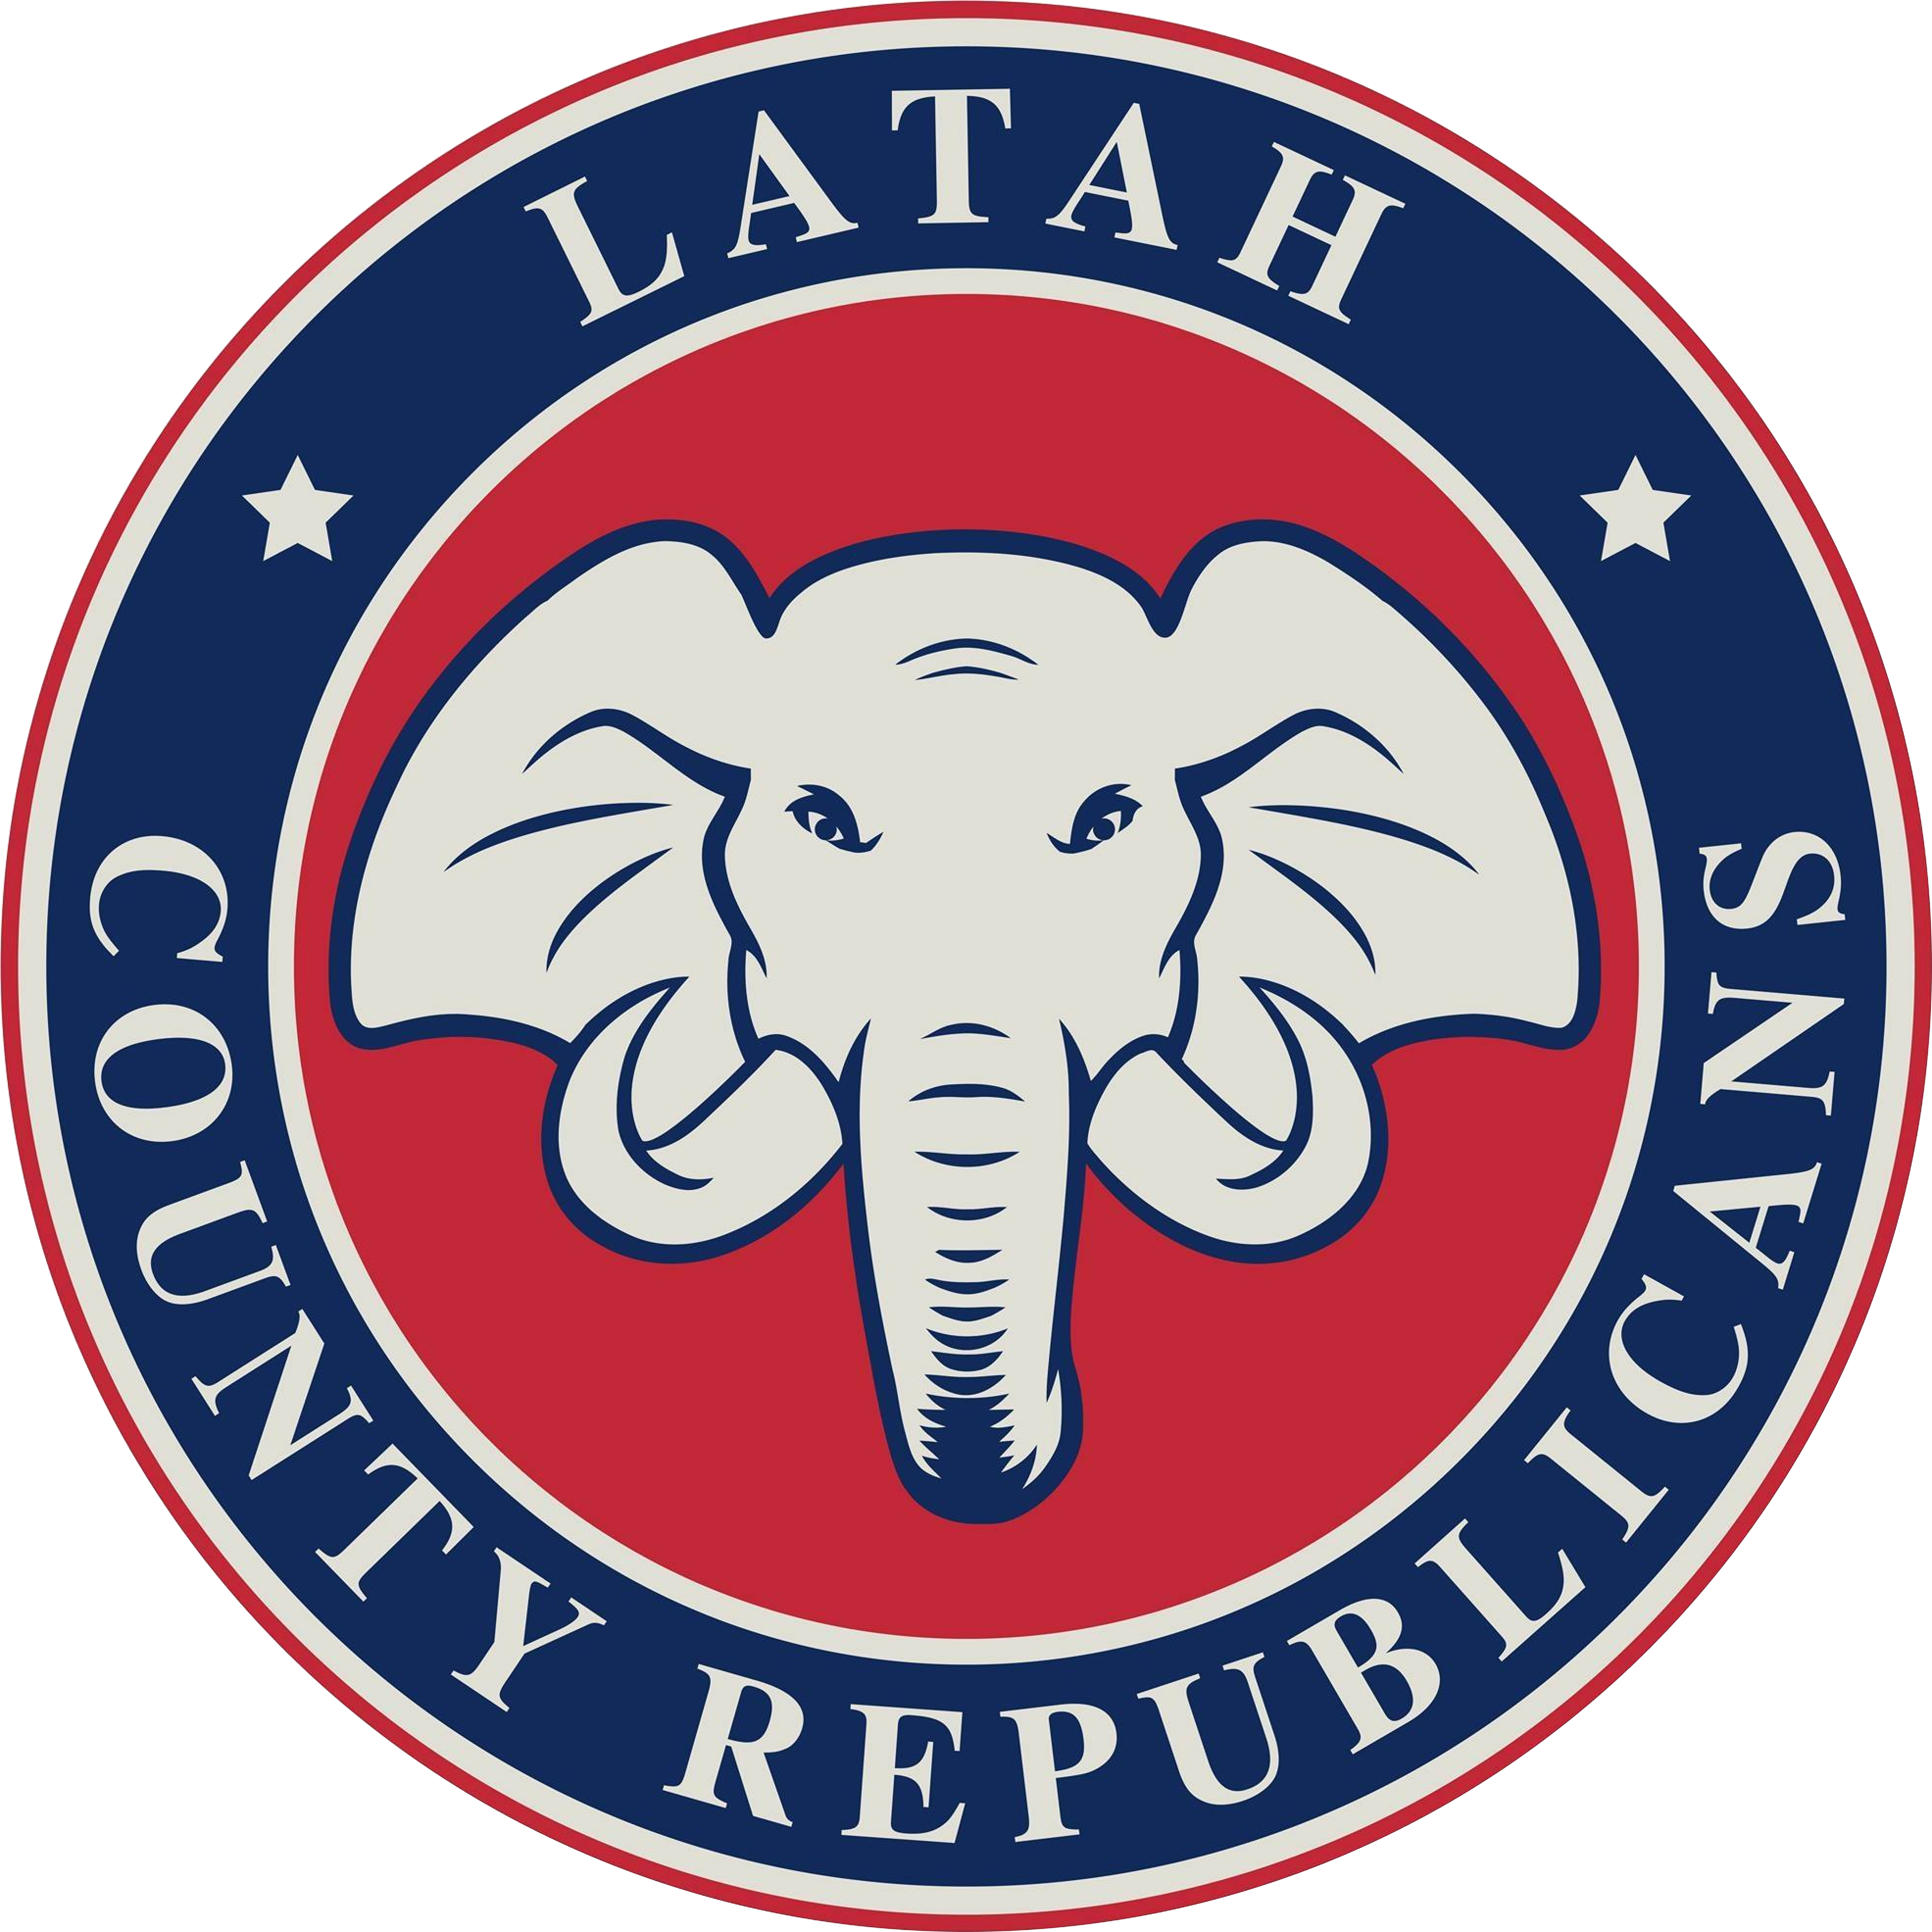 Latah County Republicans